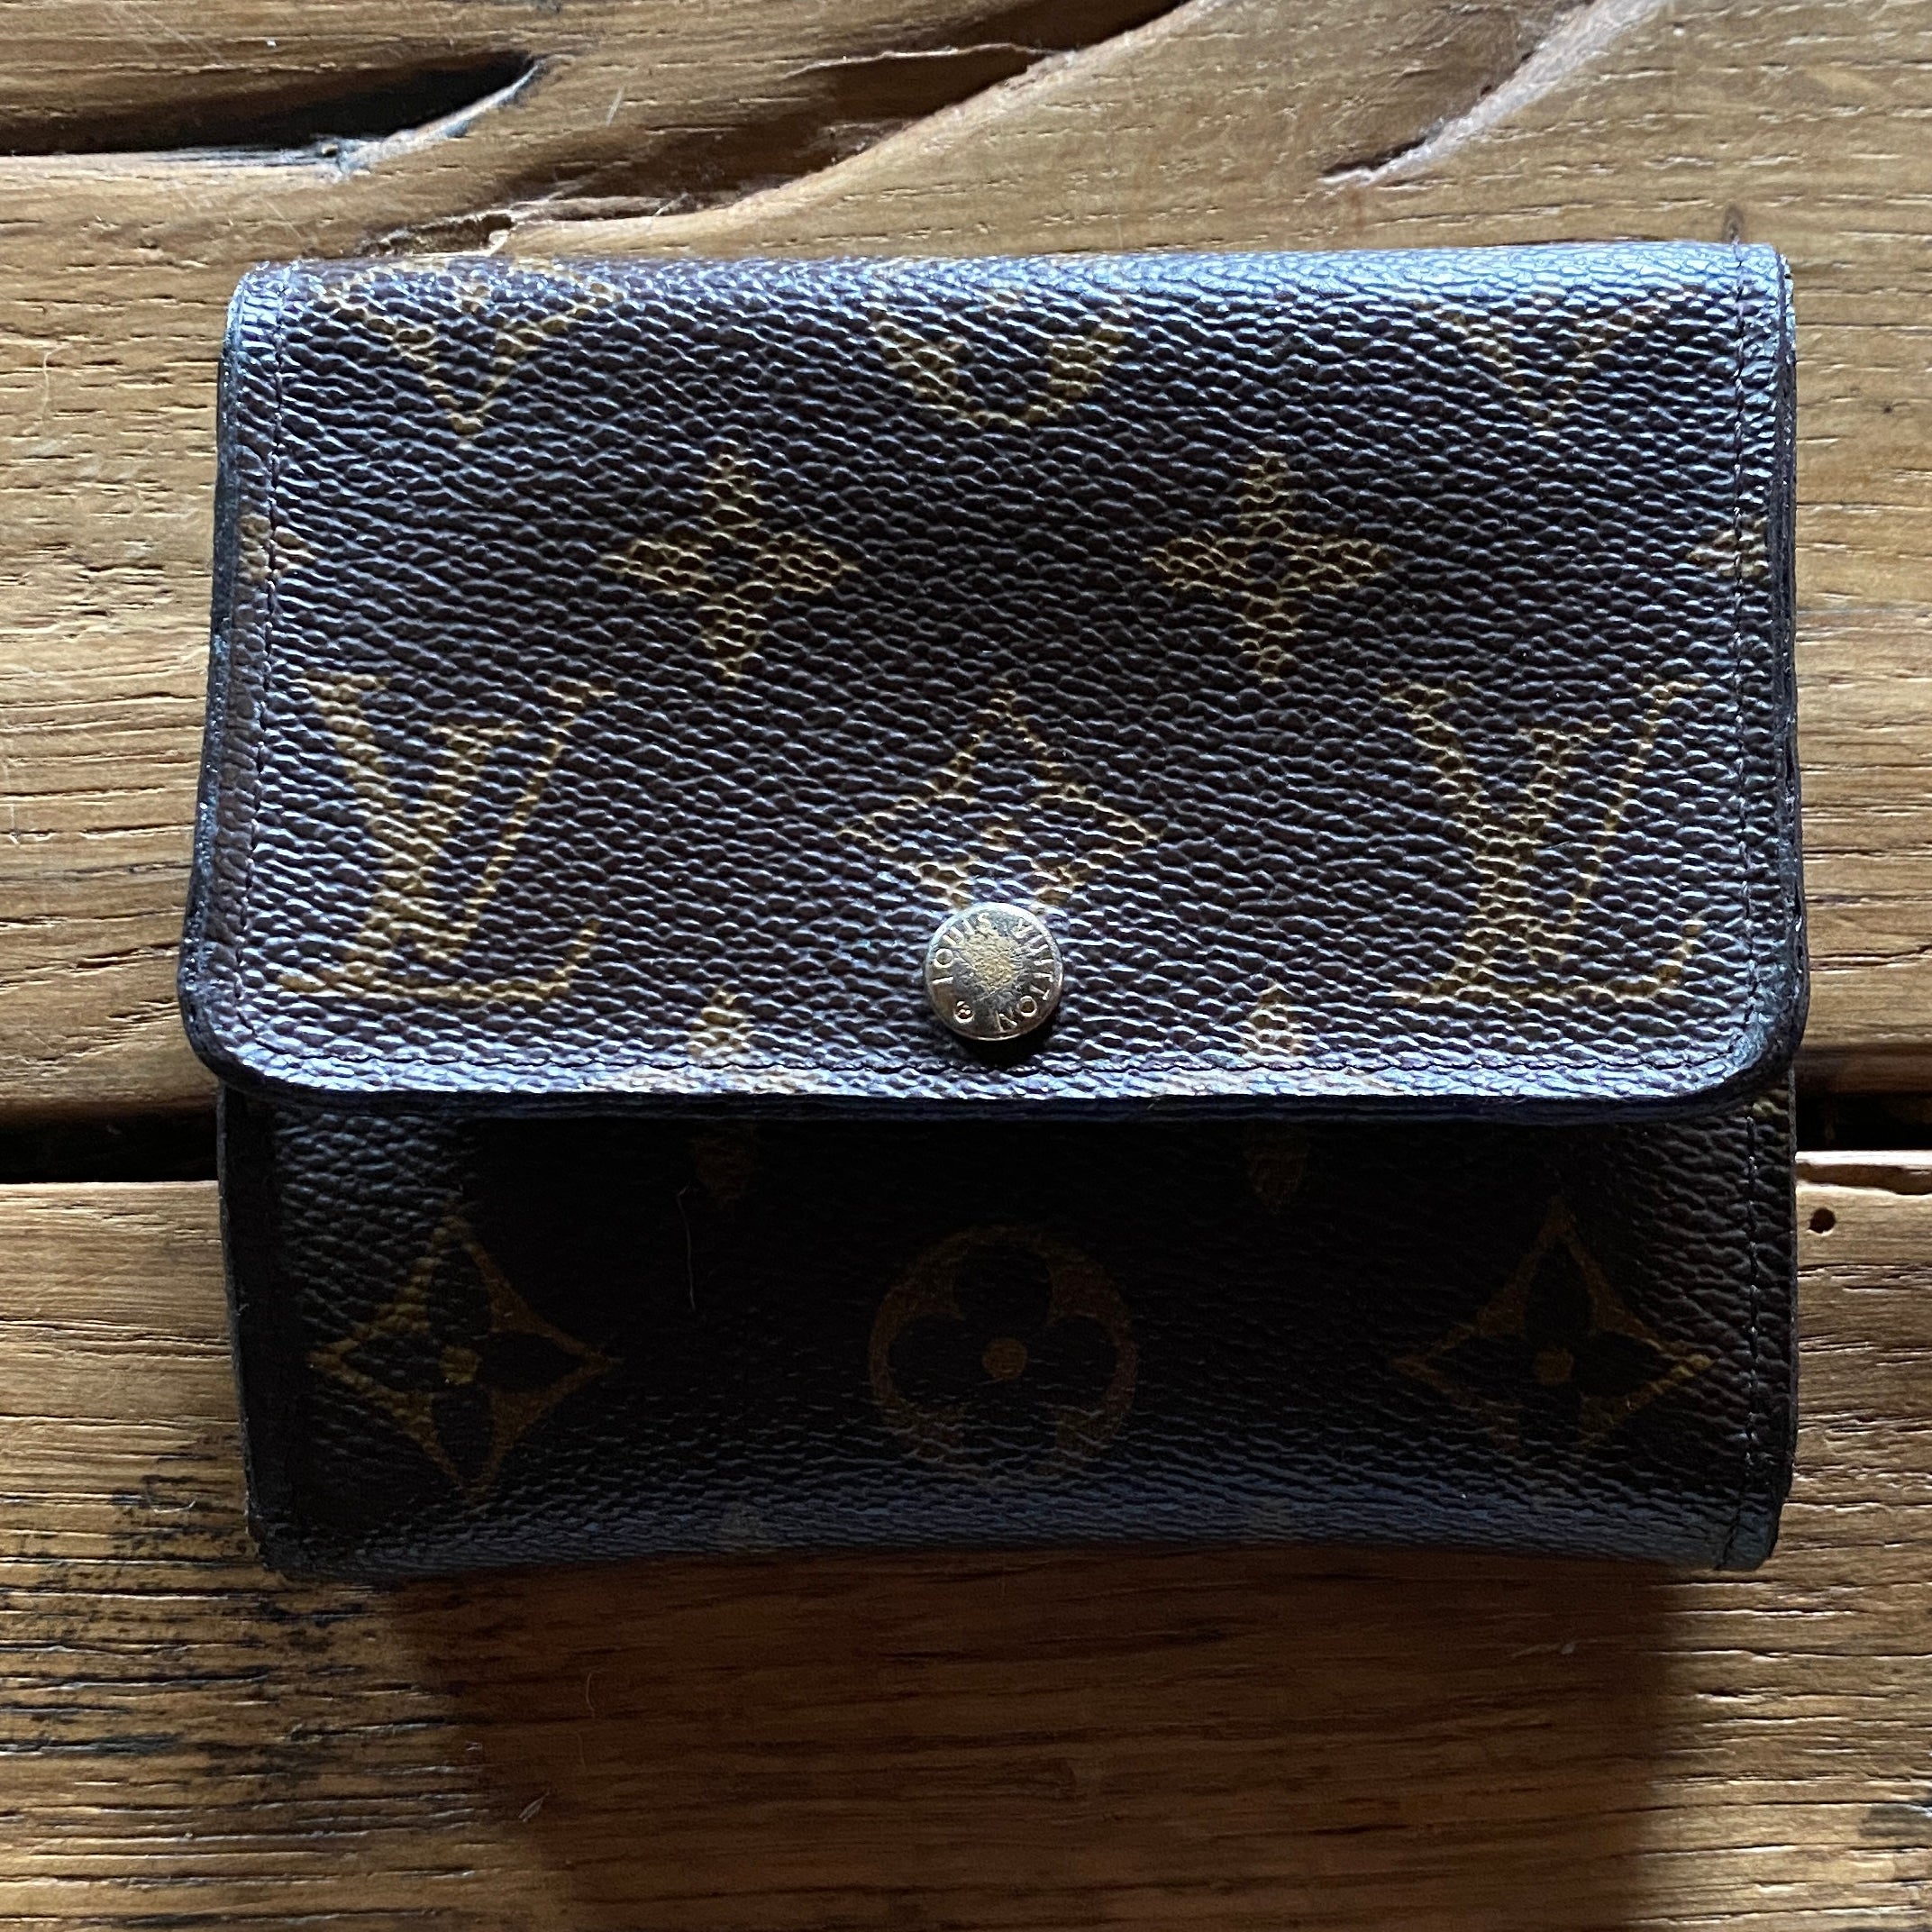 Authentic Preloved Louis Vuitton Wallet Elise Vintage Brown Monogram